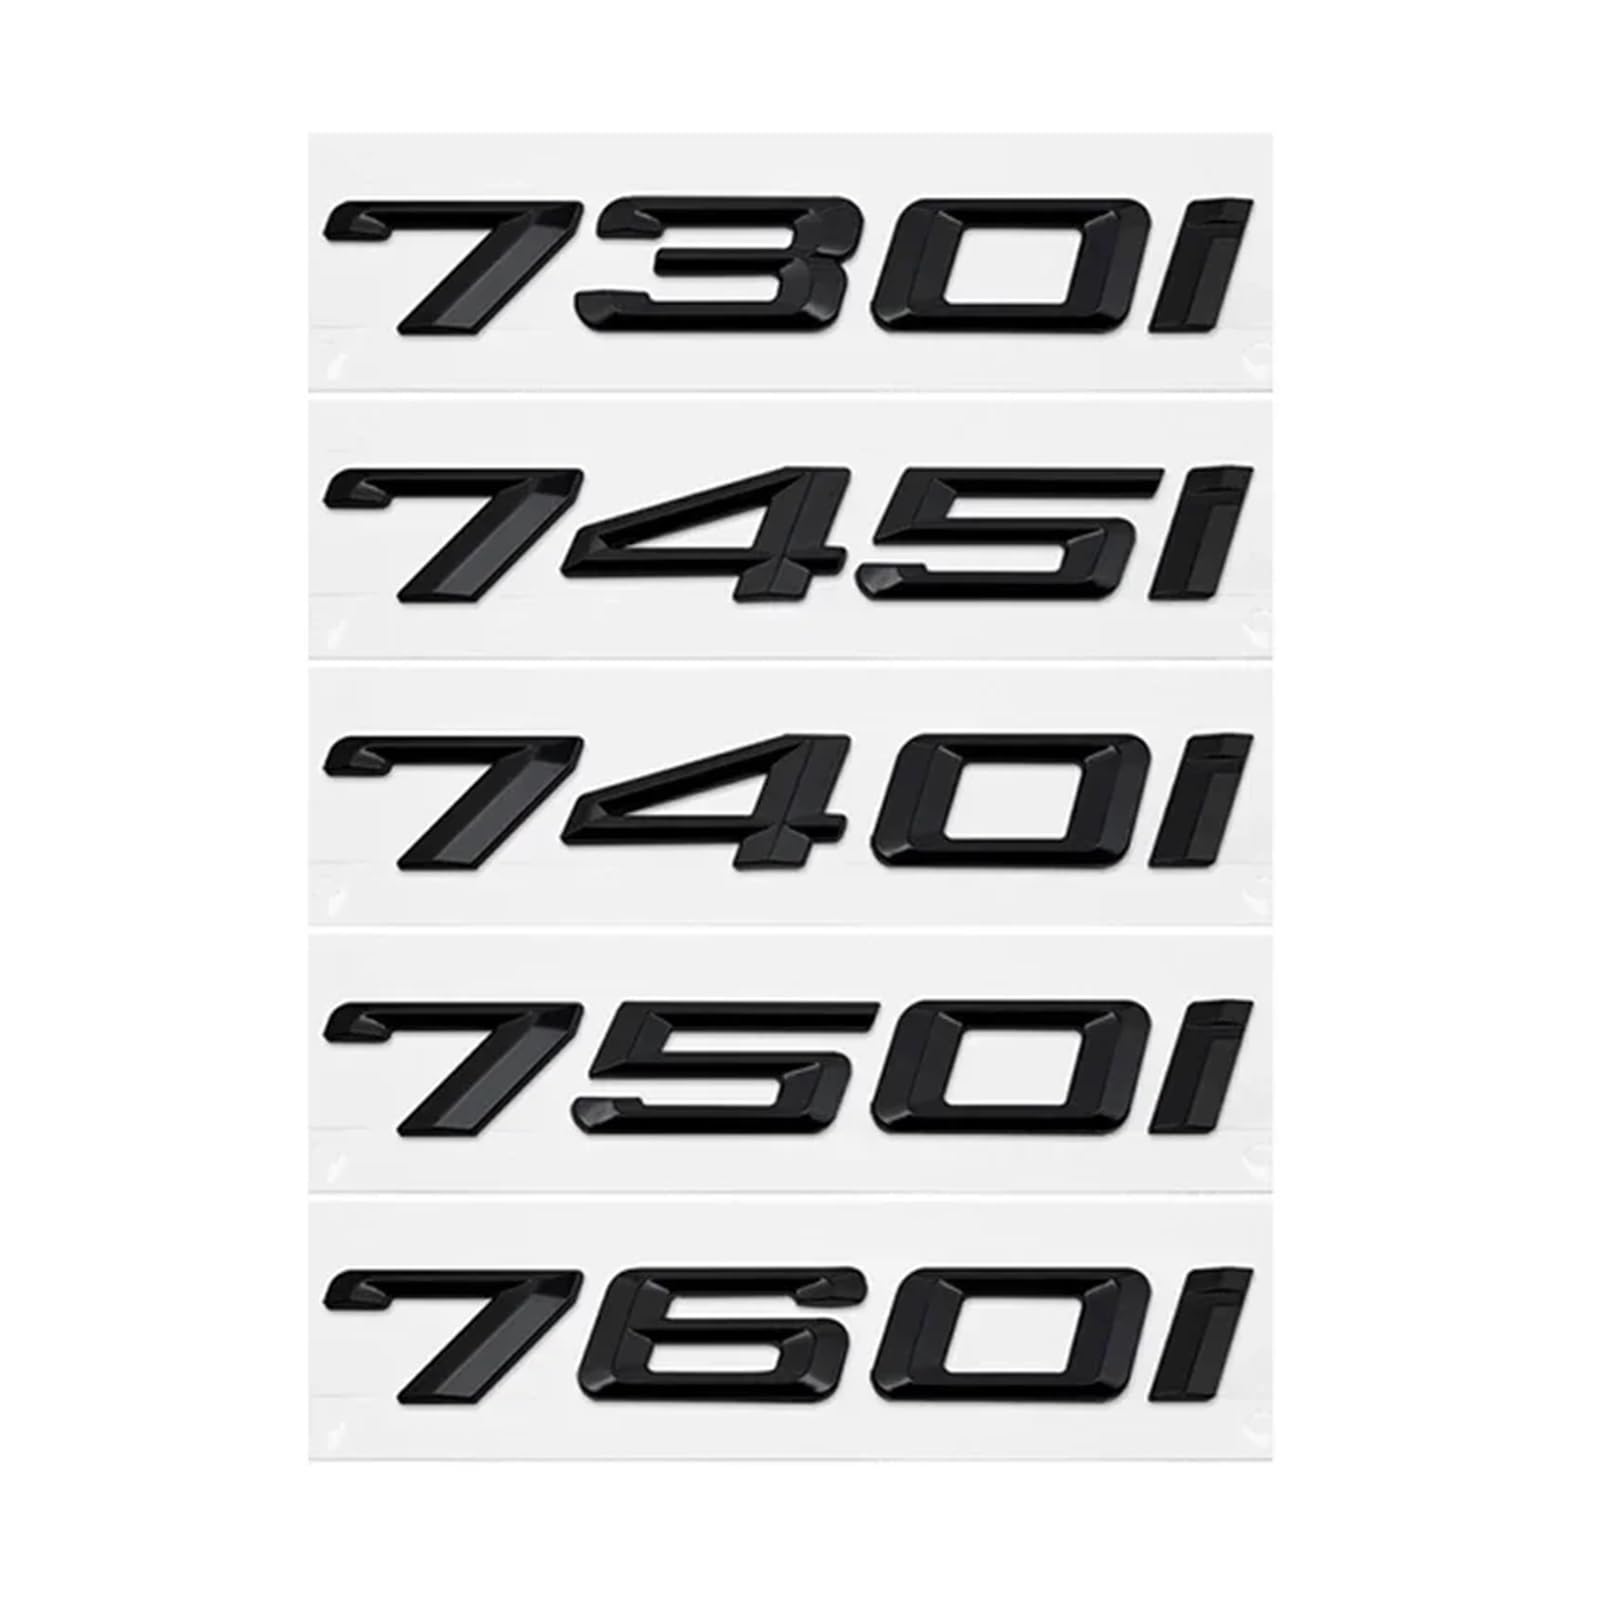 AQXYWQOL 3D ABS Auto Kofferraum Buchstaben Logo Aufkleber Abzeichen Emblem Aufkleber Kompatibel mit 7er Serie 730i 740i 745i 750i E38 E65 E66 F01 F02 G11 G12 Farbe ist konstant, verblasst nicht und be von AQXYWQOL